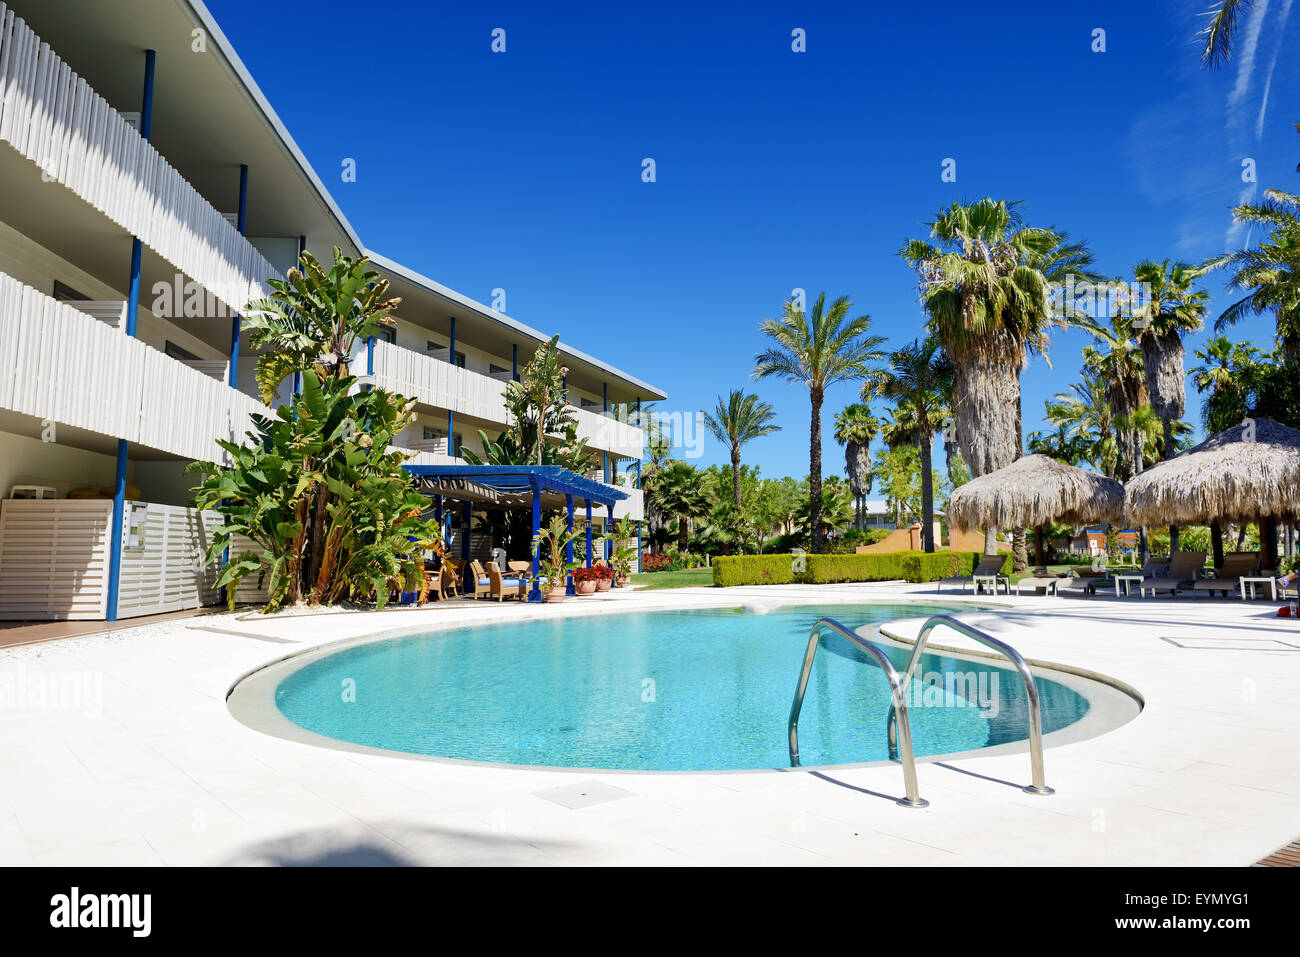 La piscine de l'hôtel de luxe, Costa Dorada, Espagne Banque D'Images